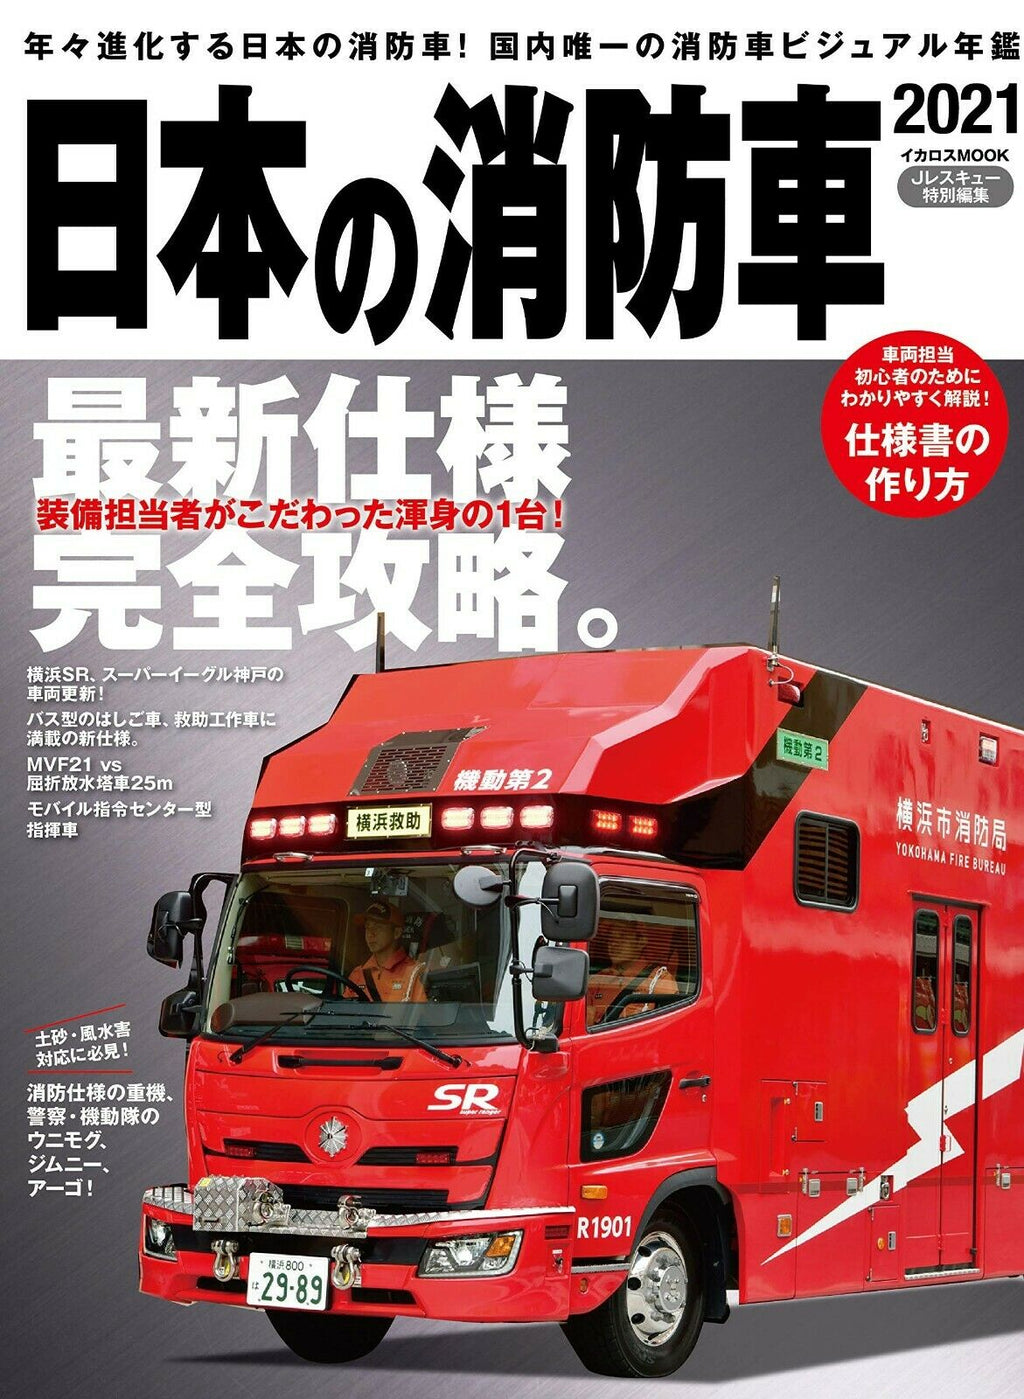 NEW Japanese Fire Truck 2021 | JAPAN Fire engine Rescue Car Book pumper rescue